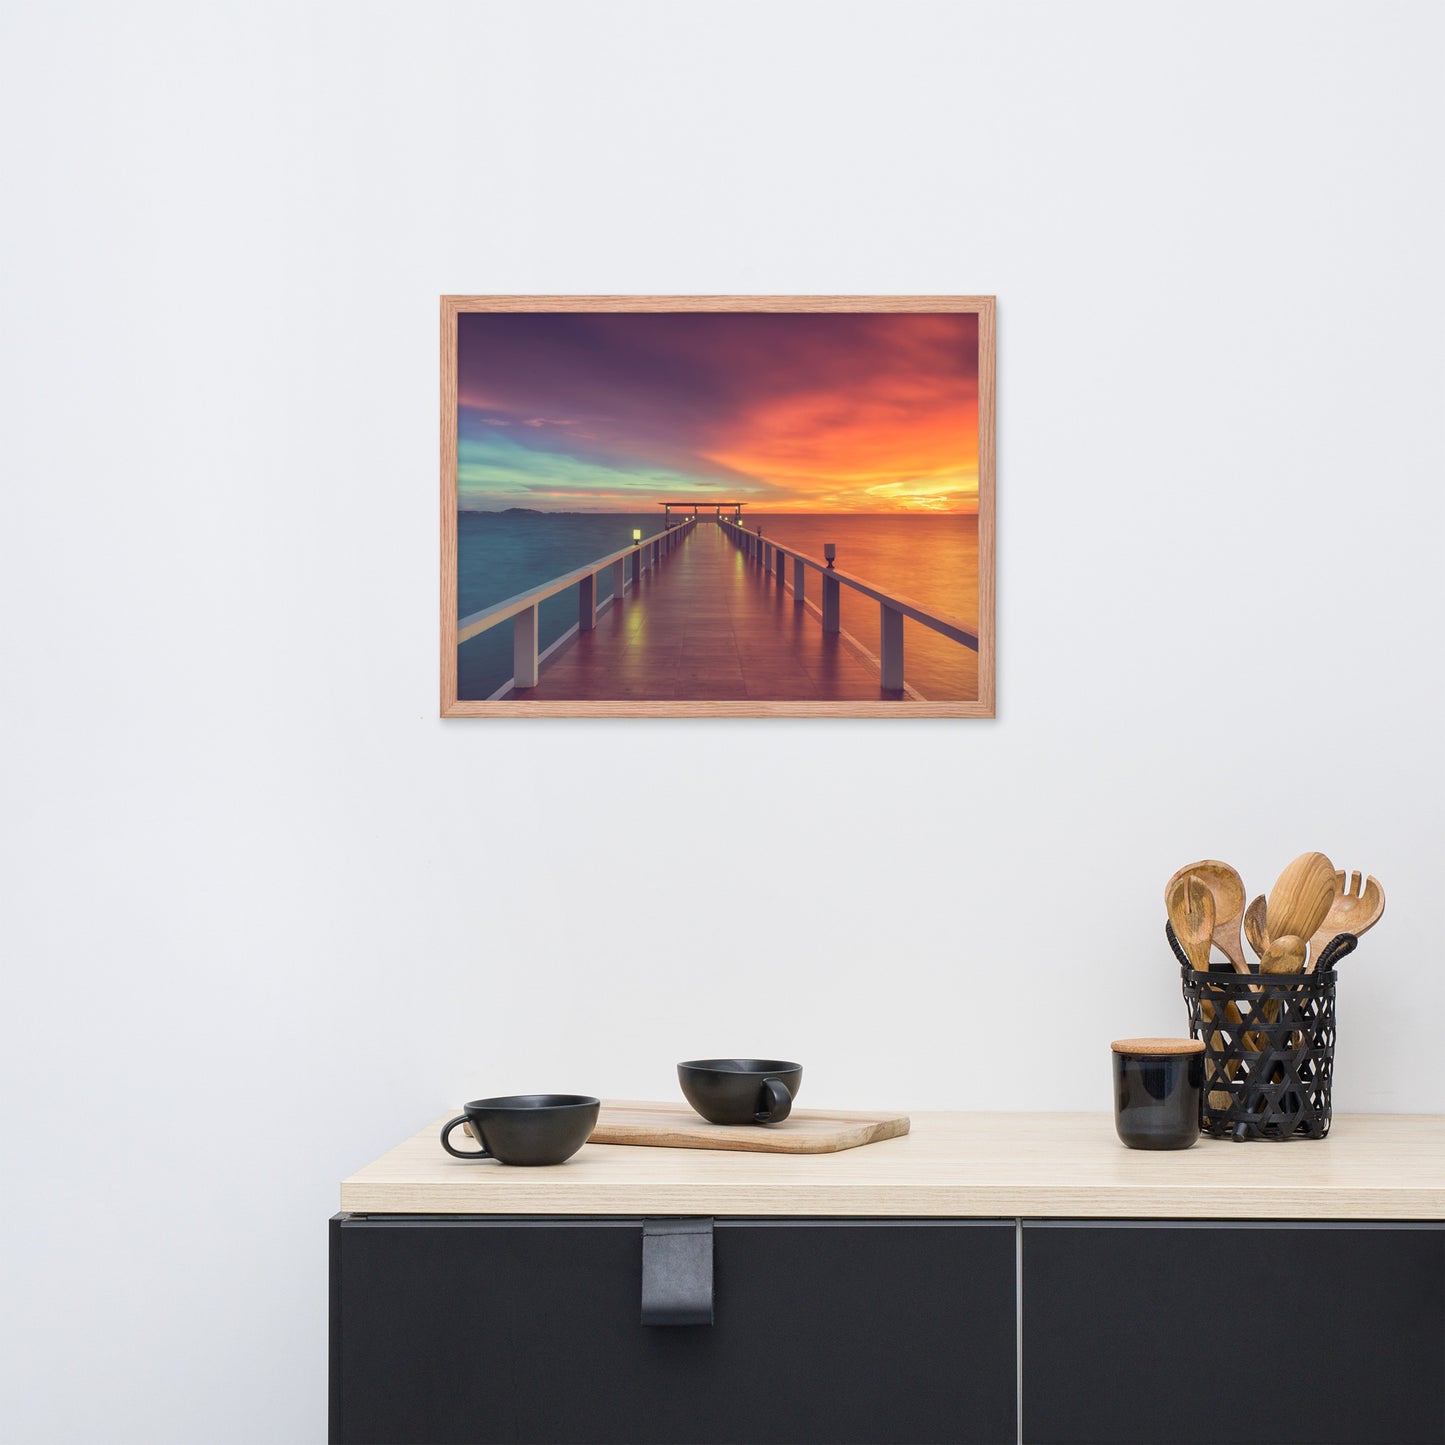 Coastal Framed Prints: Surreal Wooden Pier At Sunset with Intrigued Effect - Coastal / Seascape / Nature / Landscape Photo Framed Artwork - Wall Decor